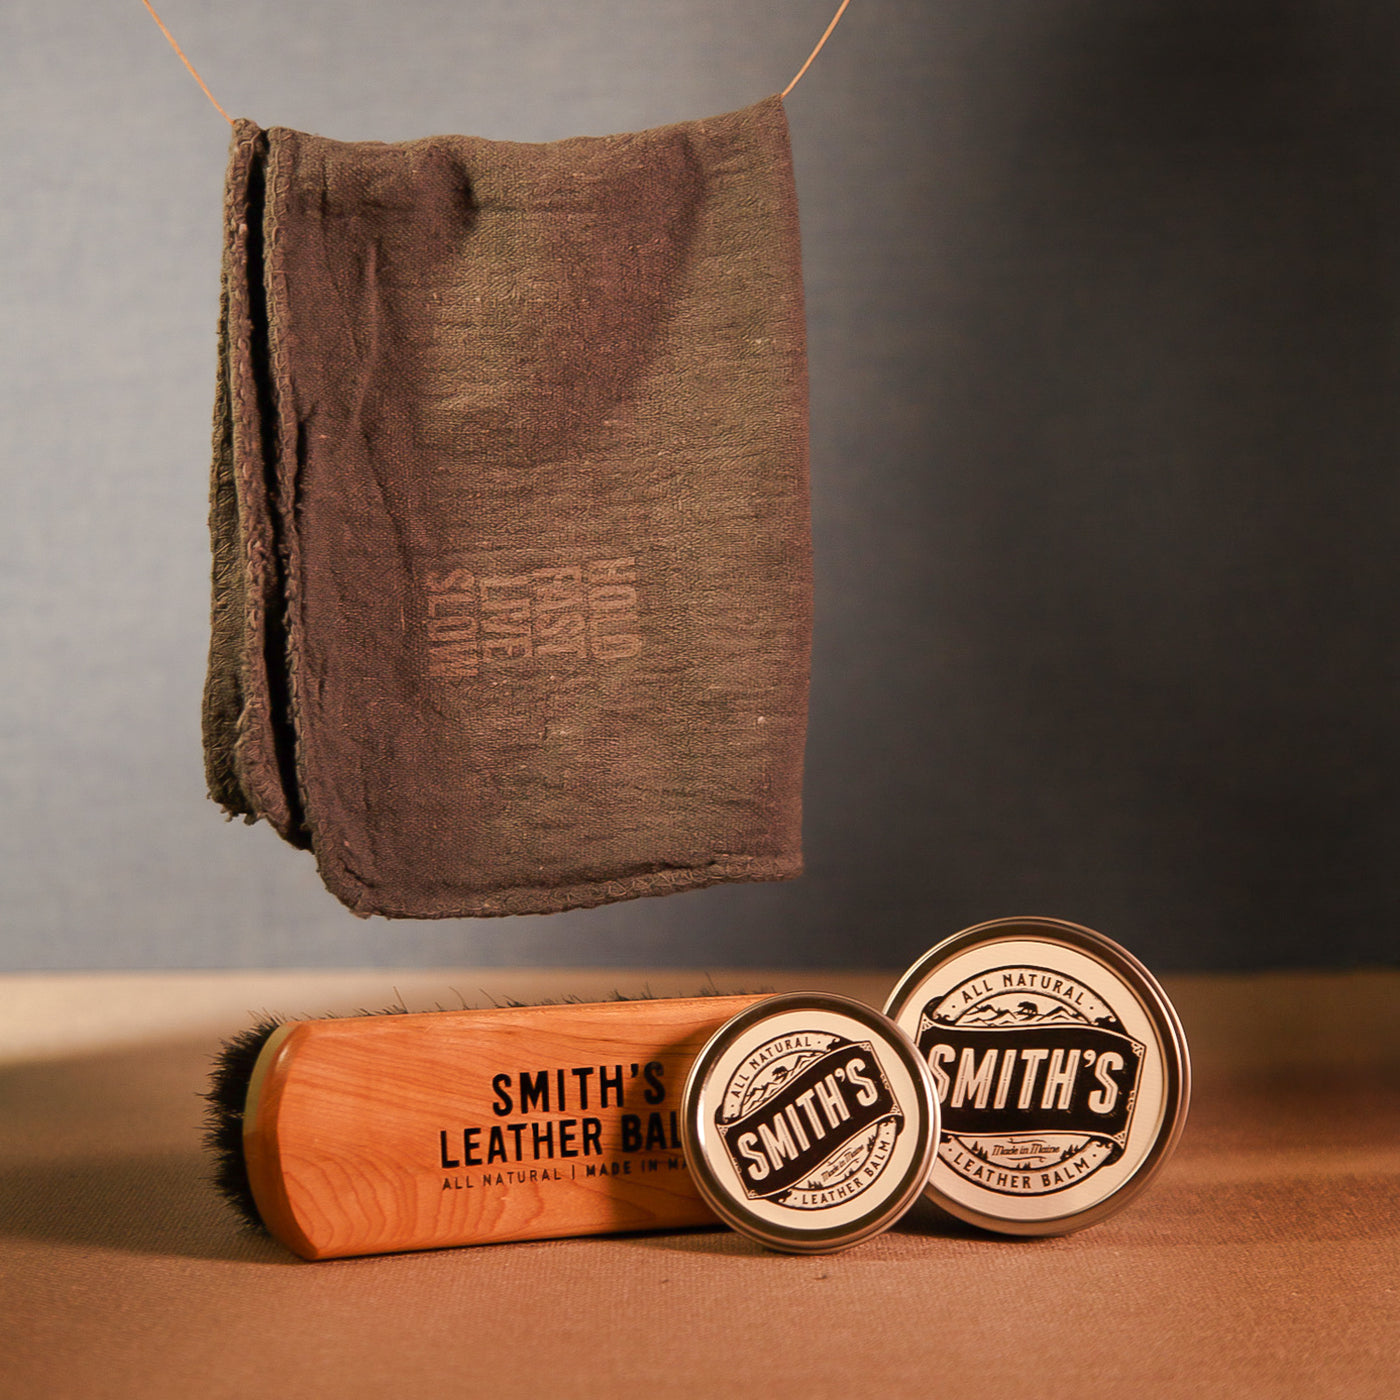 Smith's Leather Balm Shop Towel